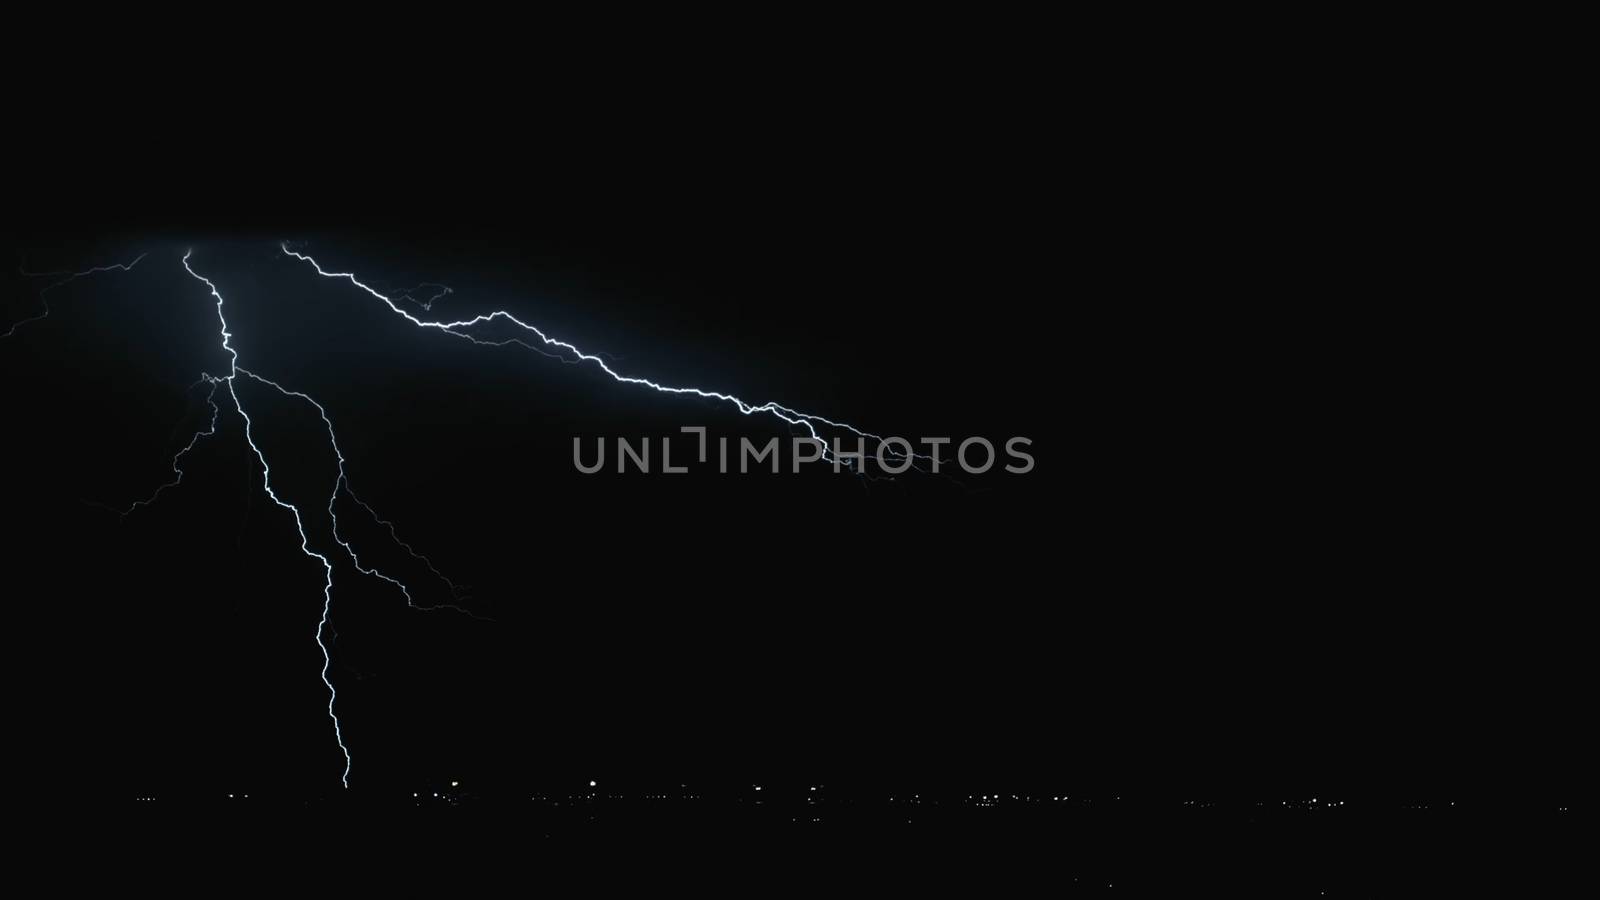 big storm lighting sky background by DonMatadoR